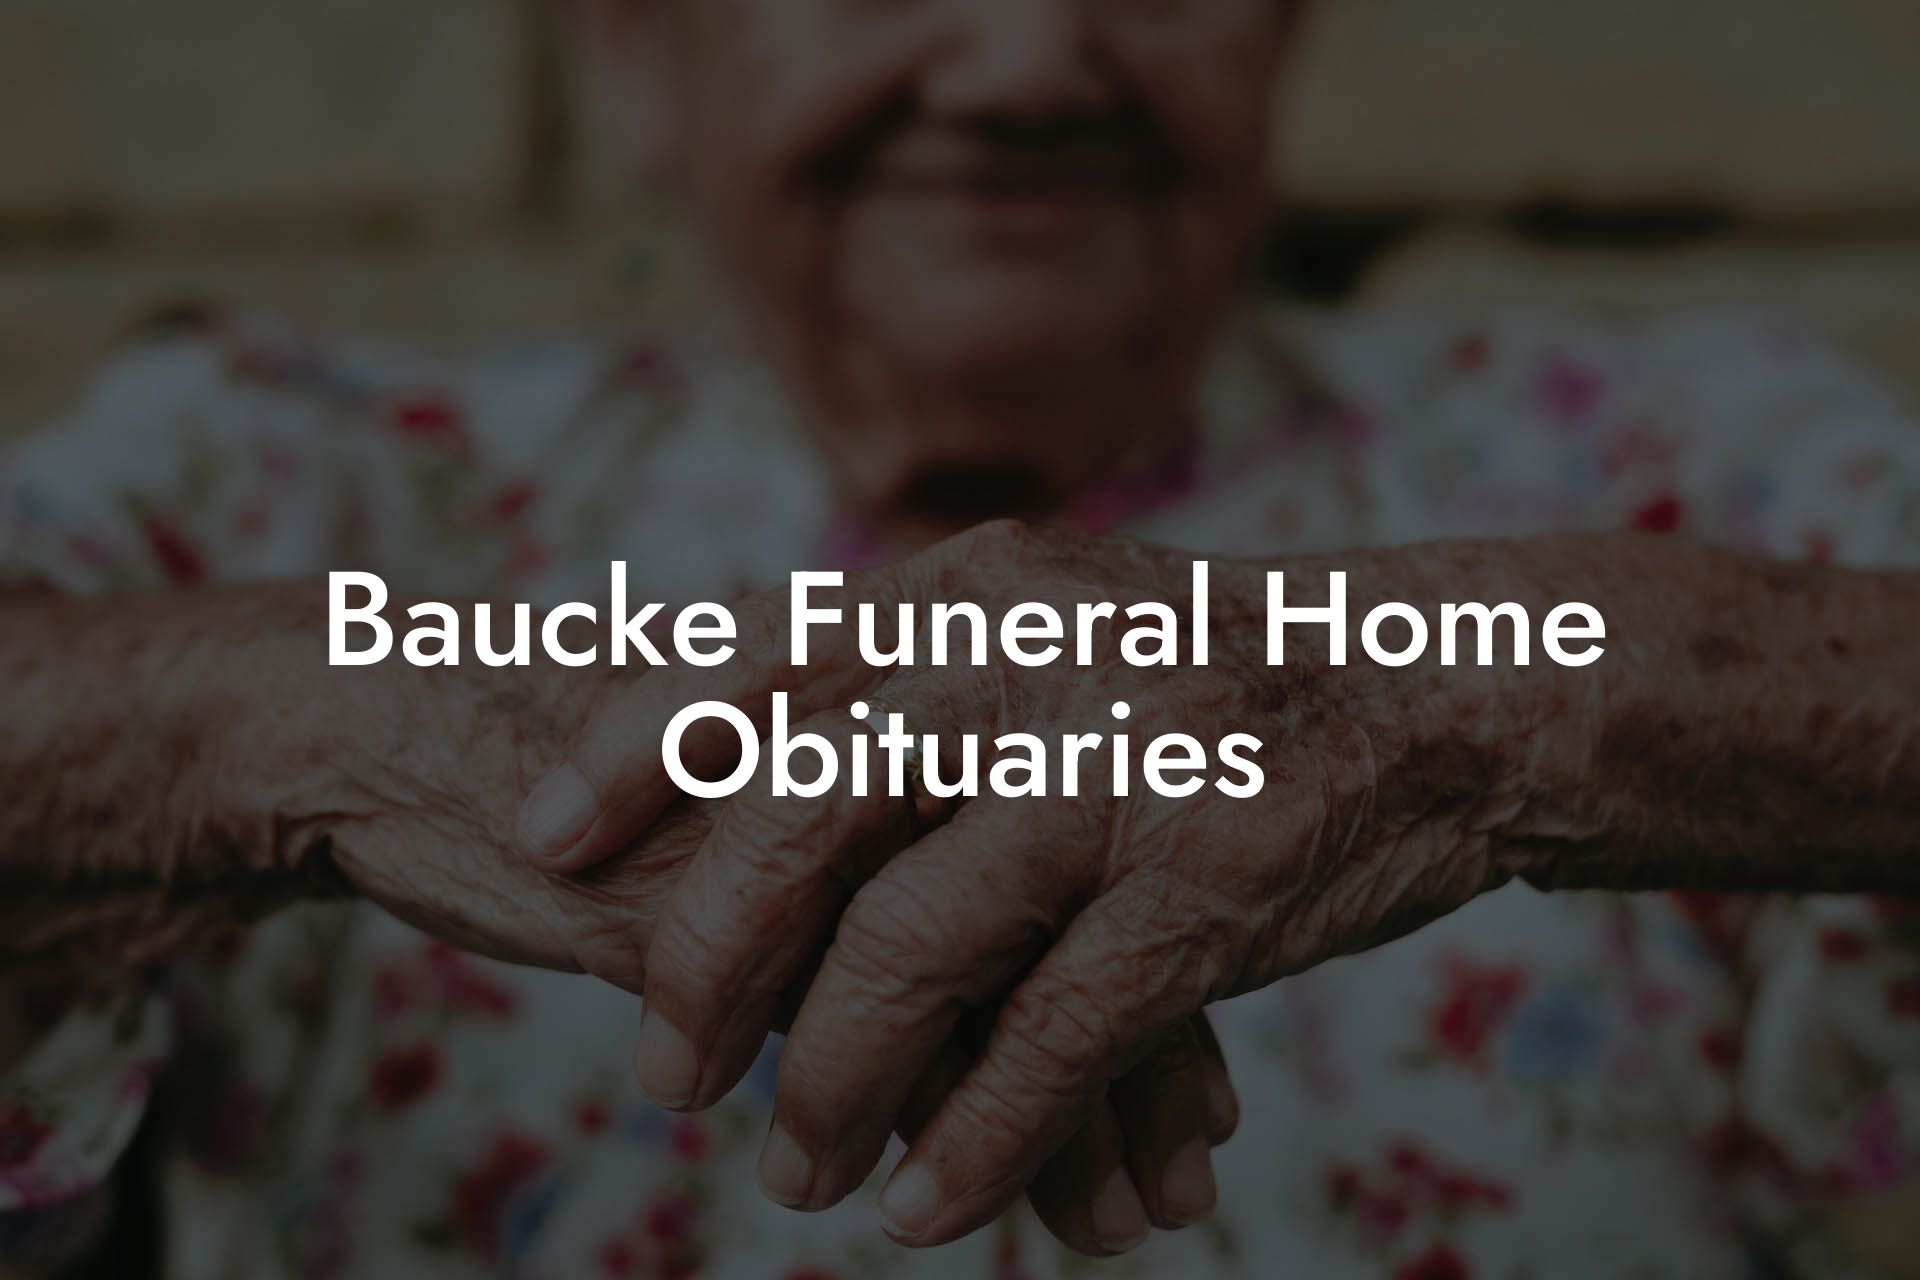 Baucke Funeral Home Obituaries